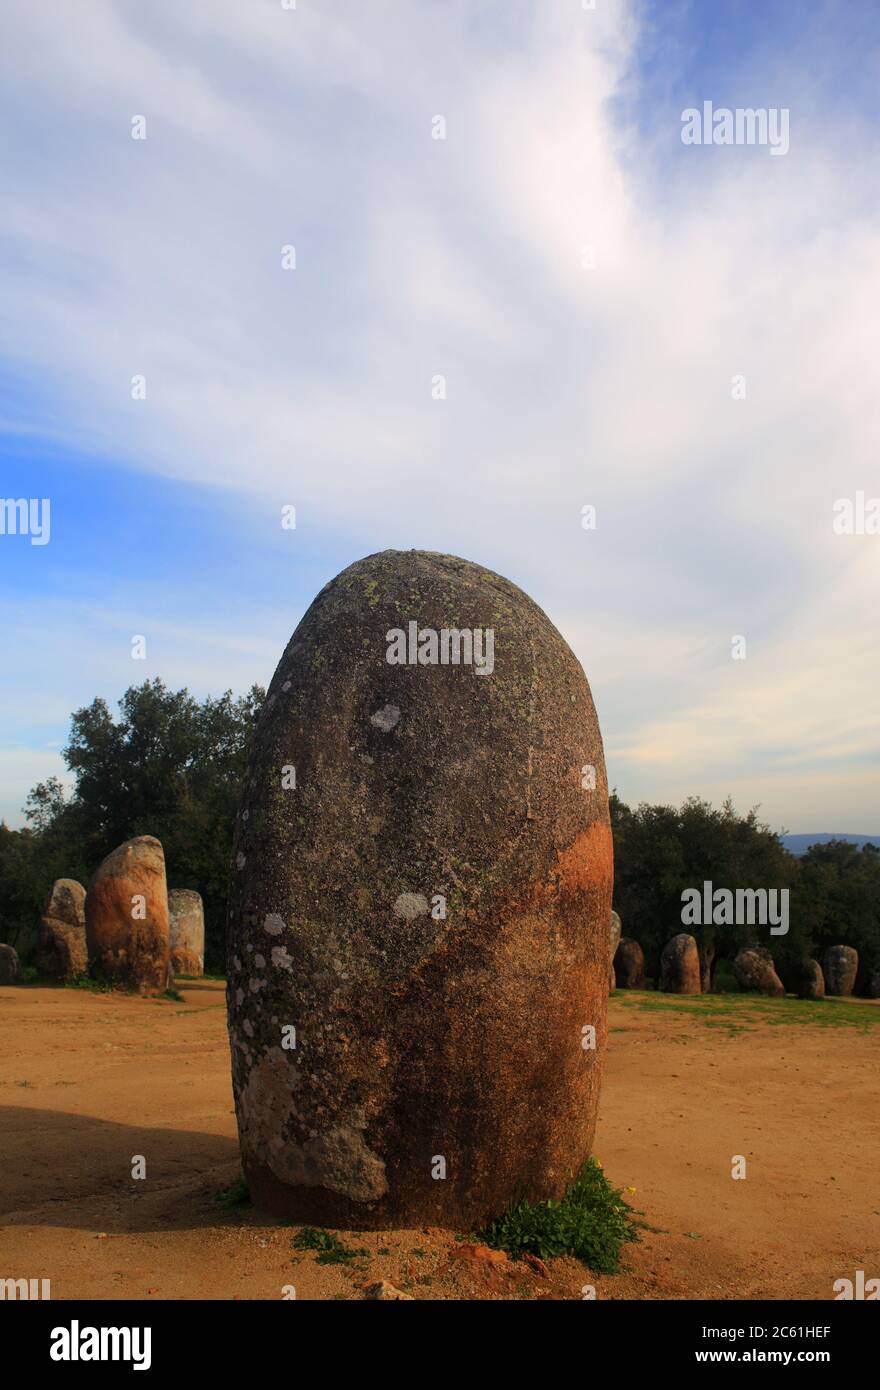 Portugal Alentejo Region Evora Chromlech of Almendres standing granite stones from the megalithic period of archaeoastronomical interest UNESCO site. Stock Photo